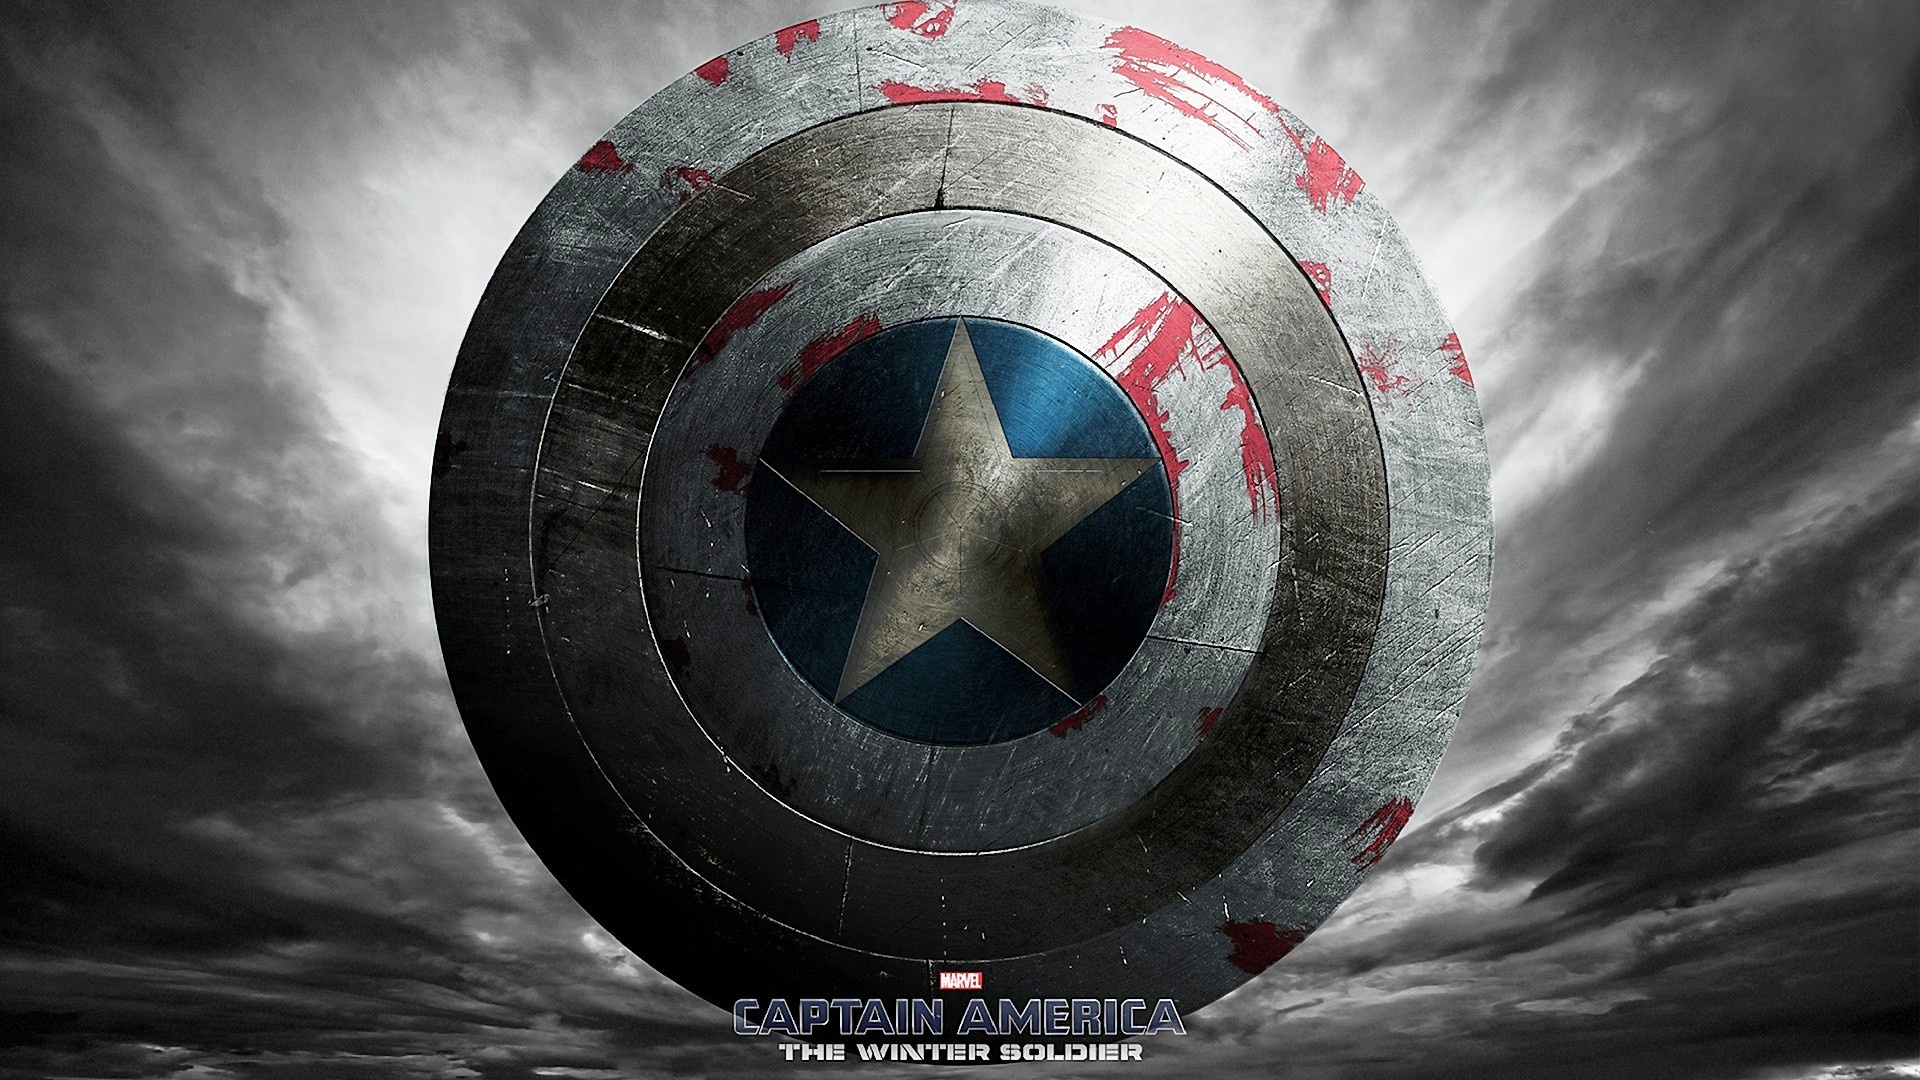 captain america shield the winter soldier movie 2014 hd wallpaper 1920x1080